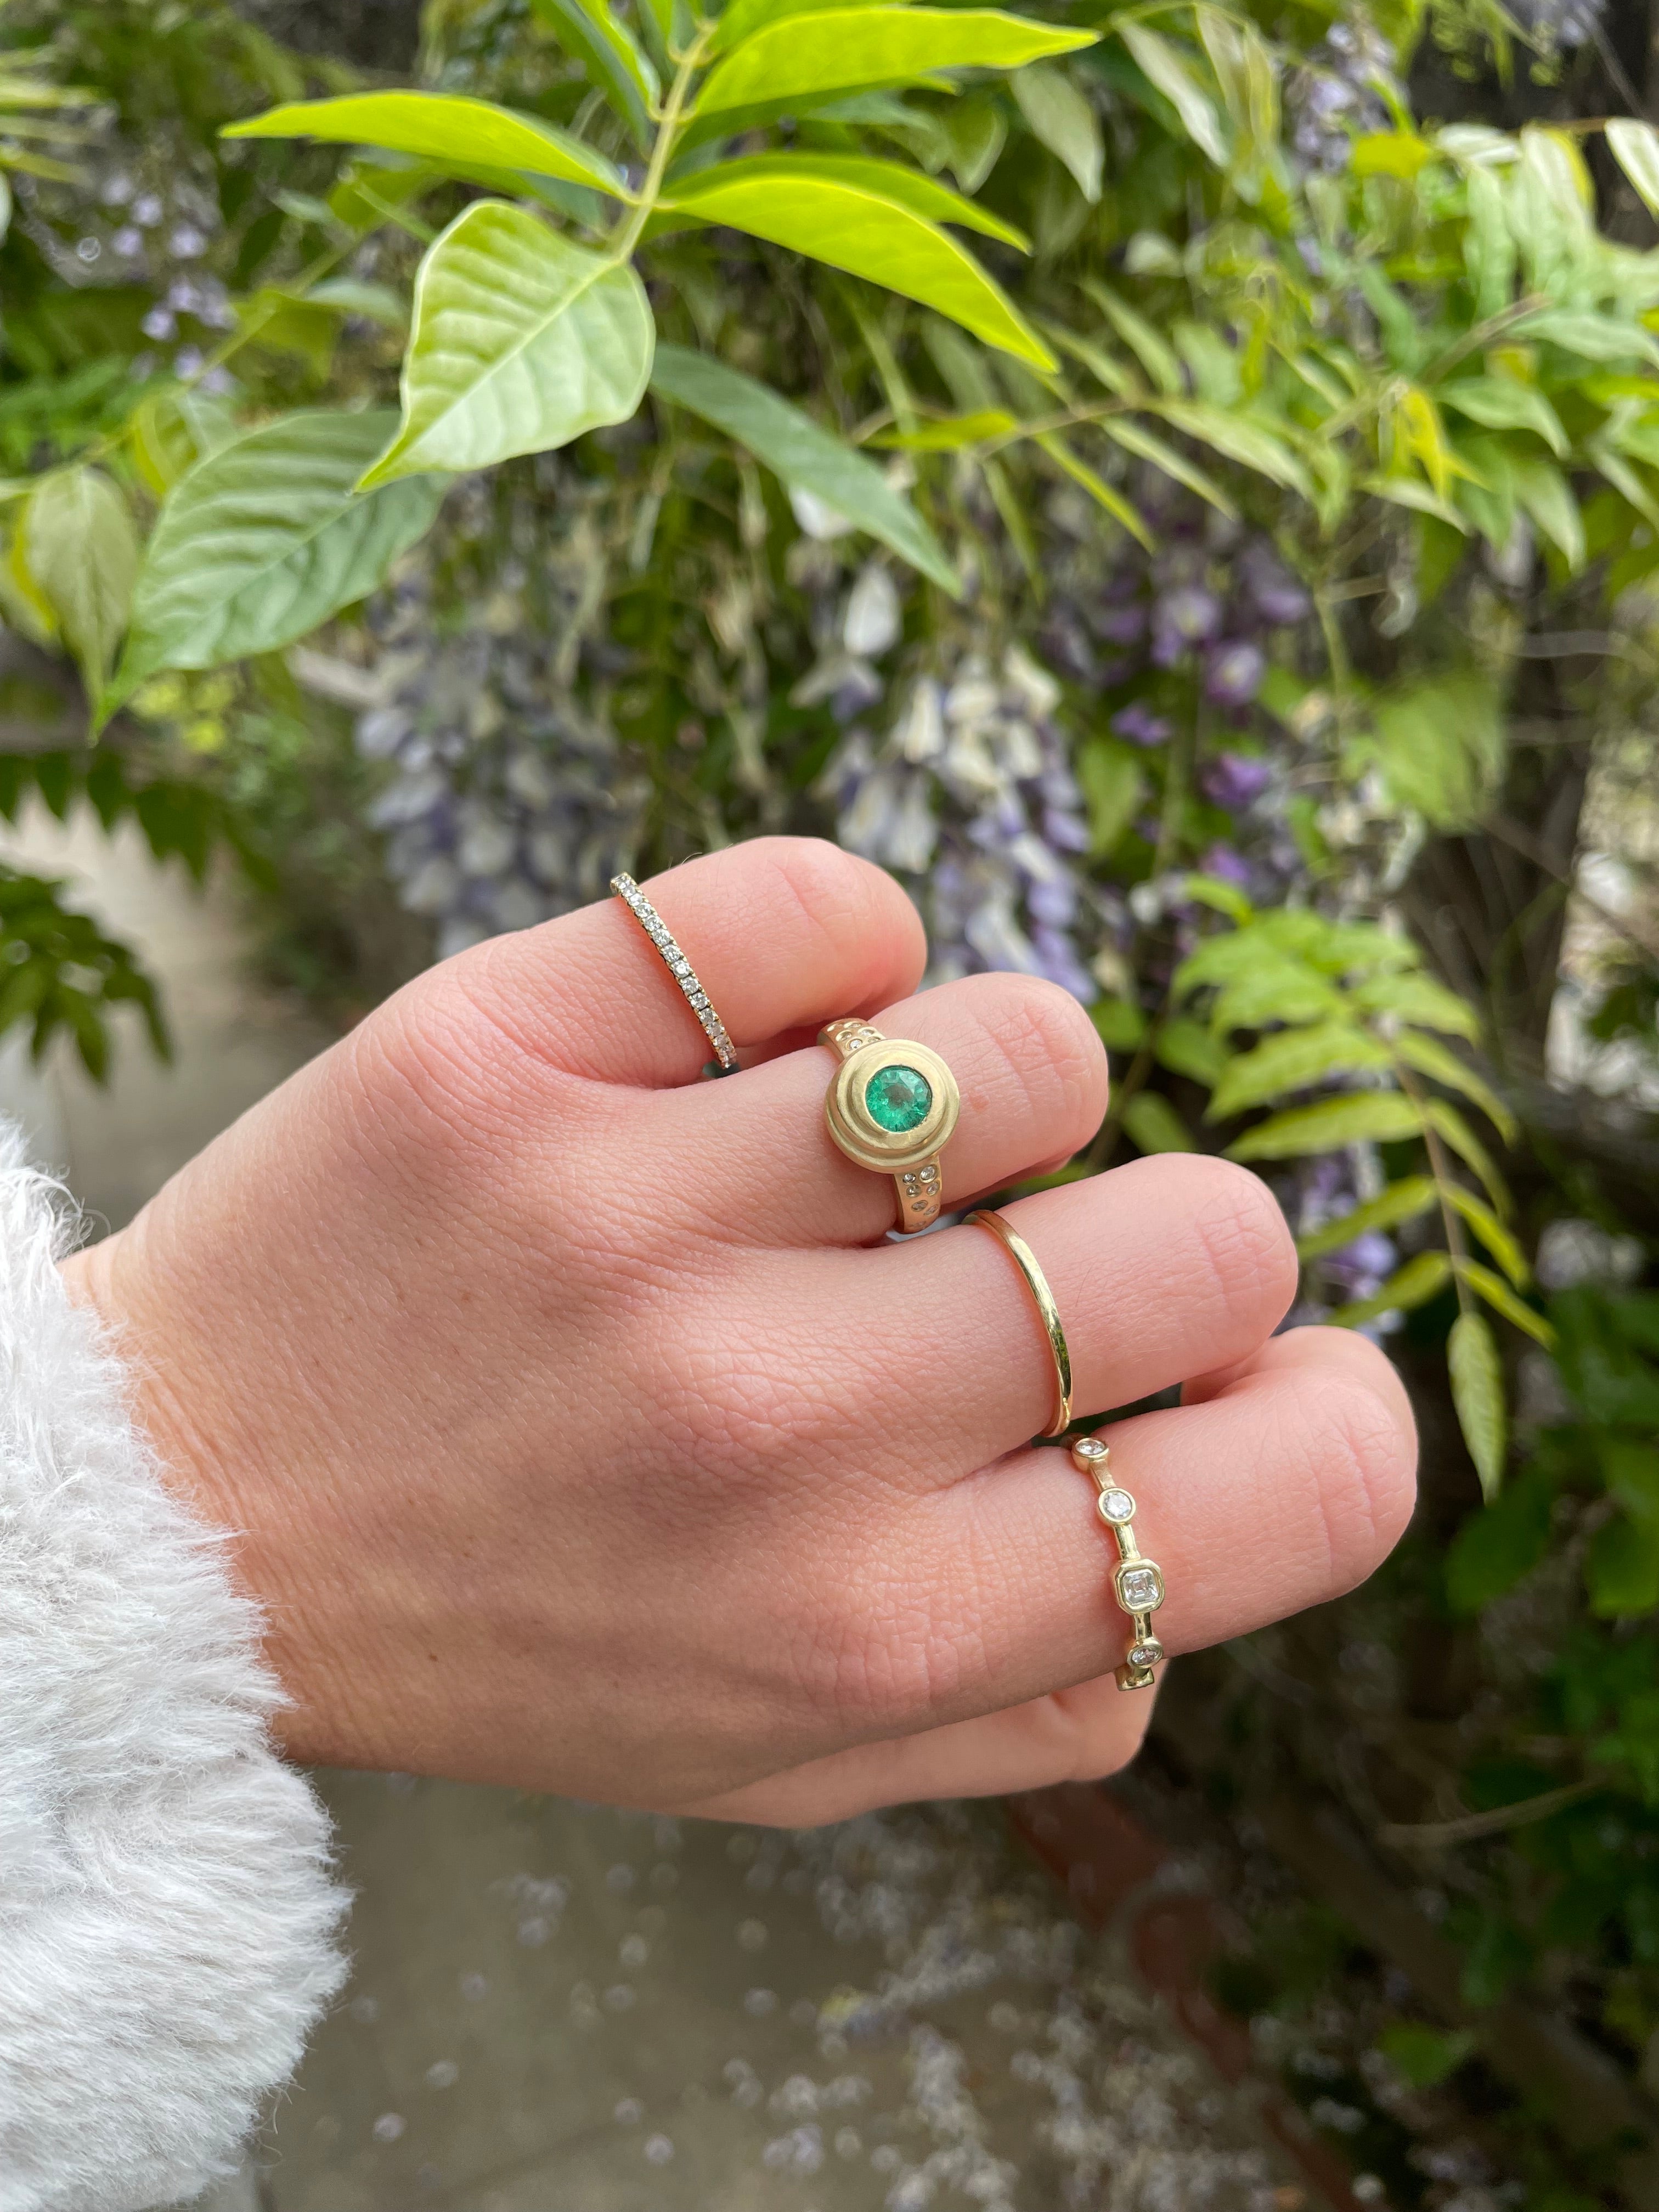 Emerald Swirl Ring